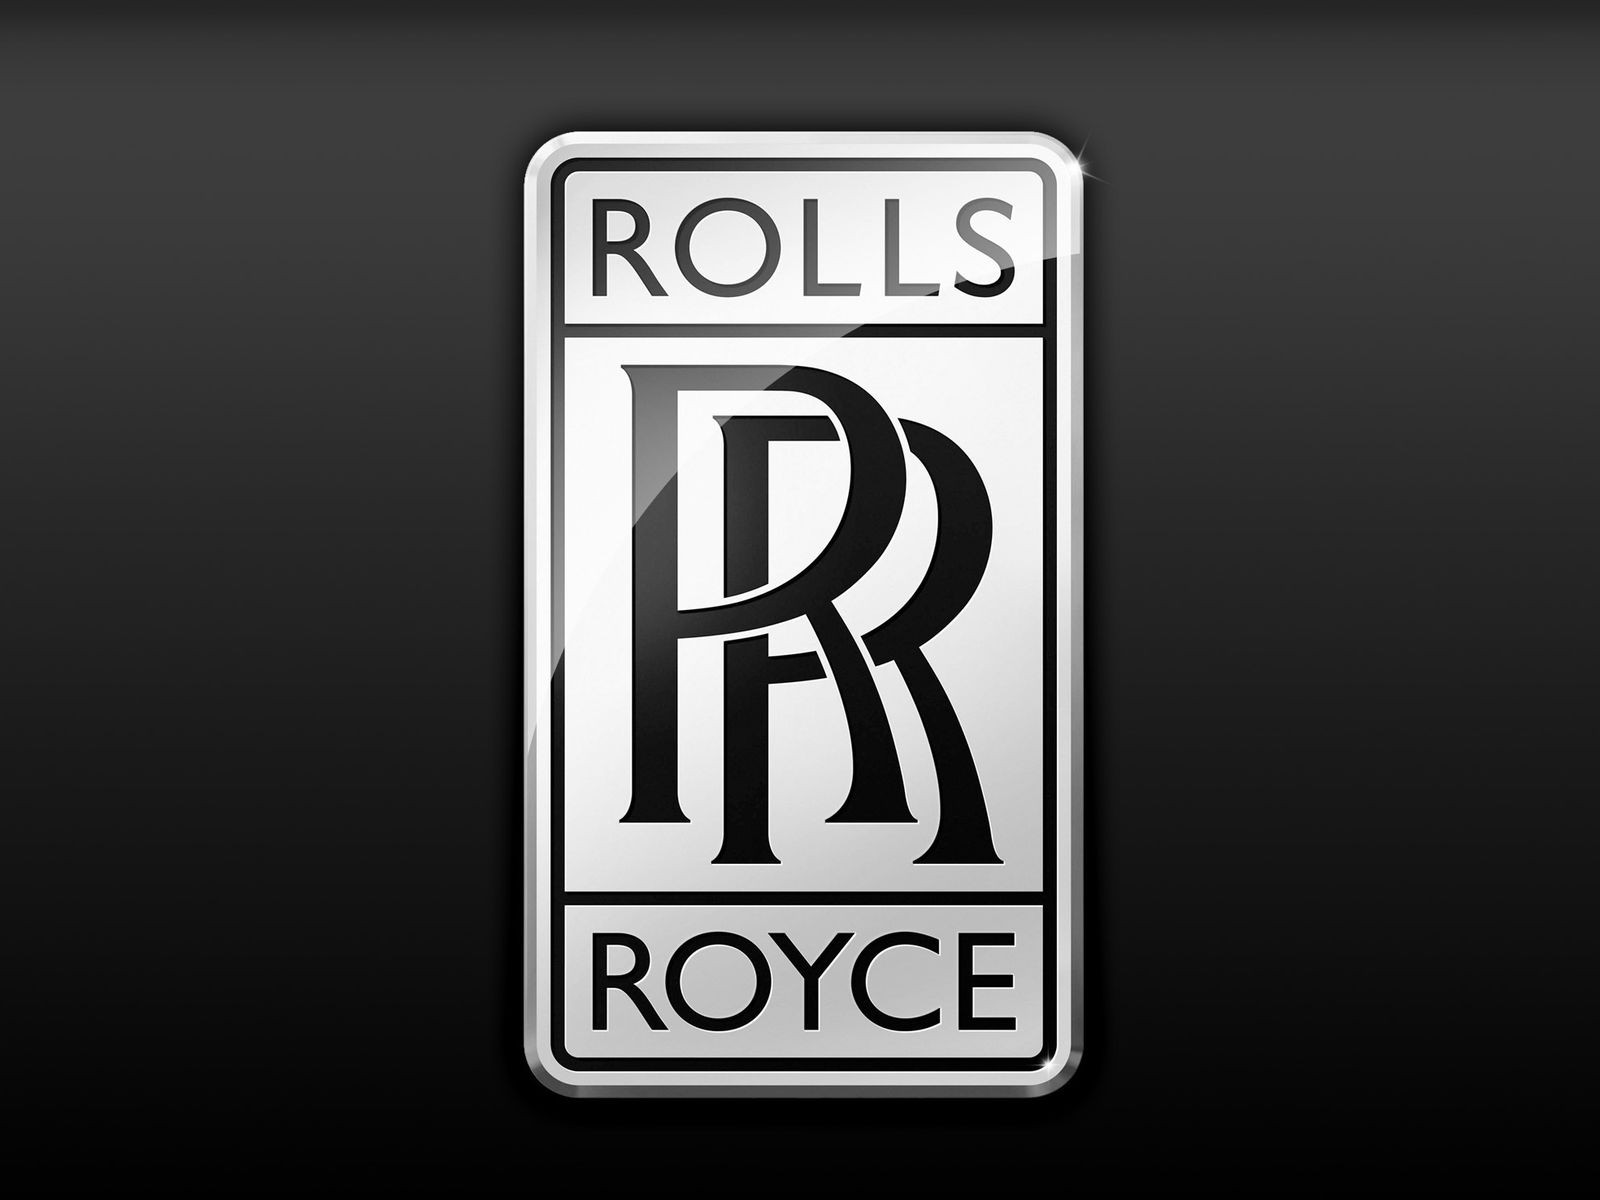 Chi tiết 64 về logo rolls royce symbol hay nhất  Du học Akina